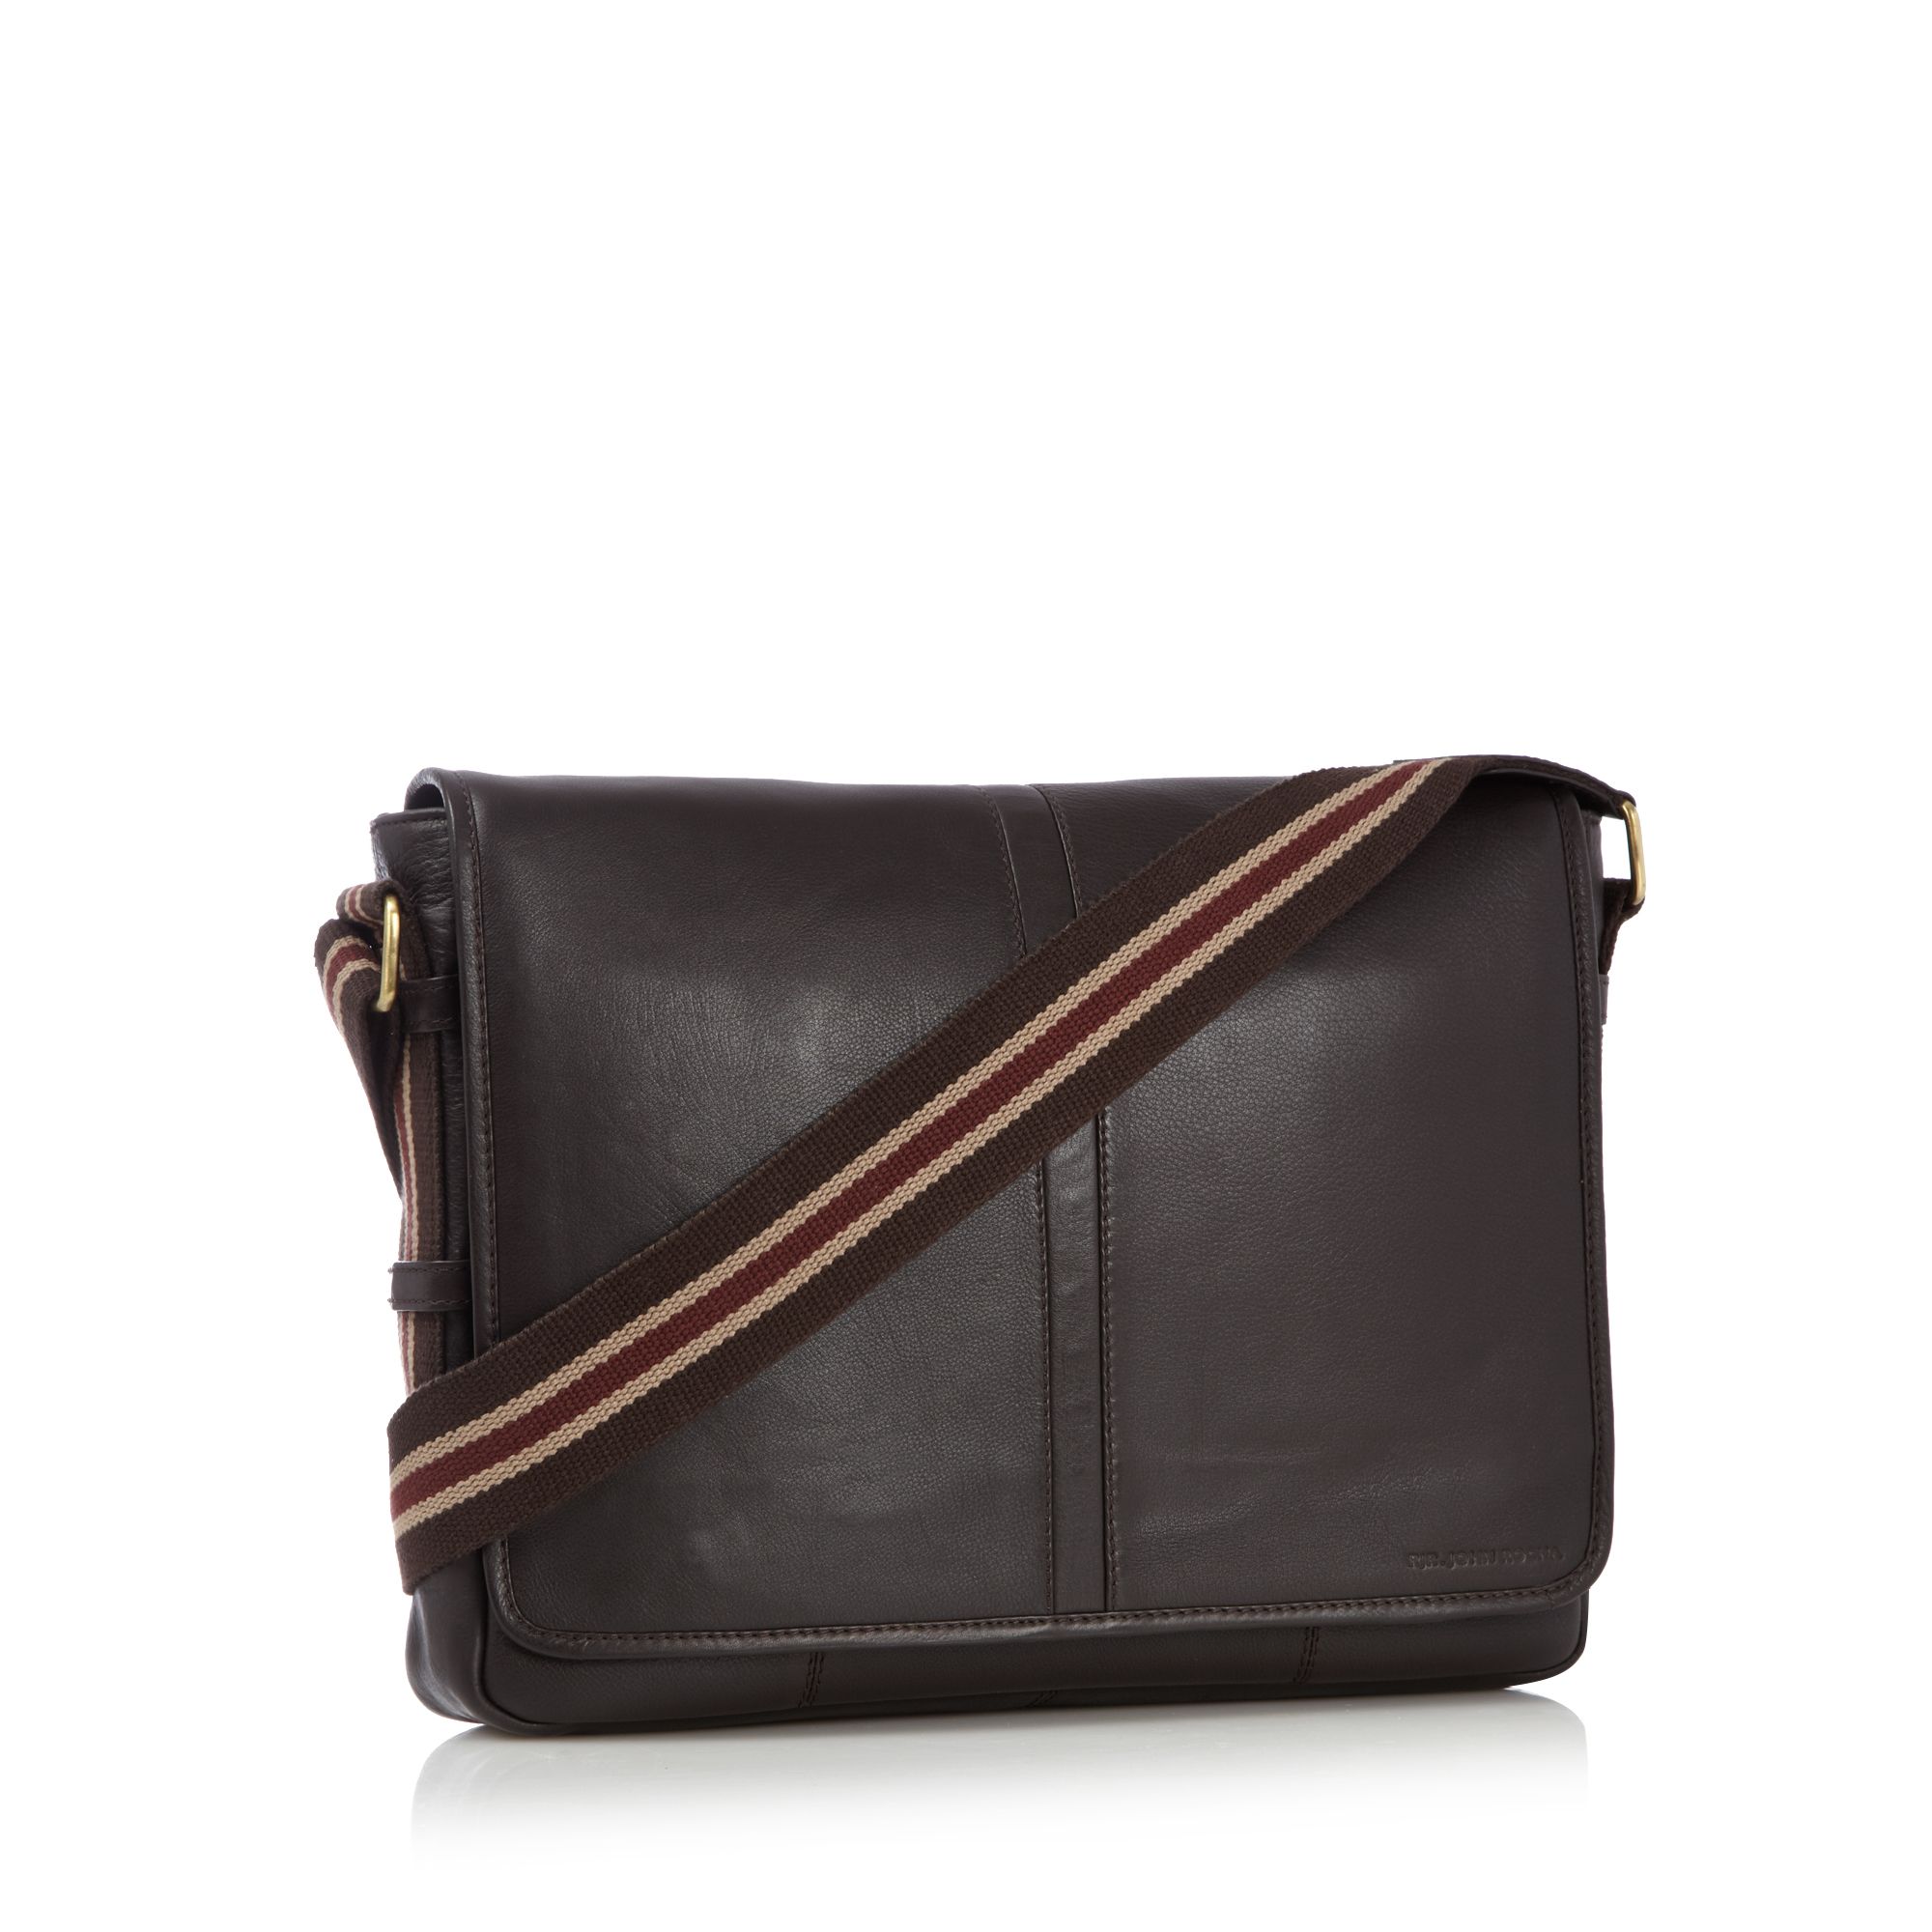 Rjr.John Rocha Mens Designer Brown Leather Despatch Bag From Debenhams | eBay